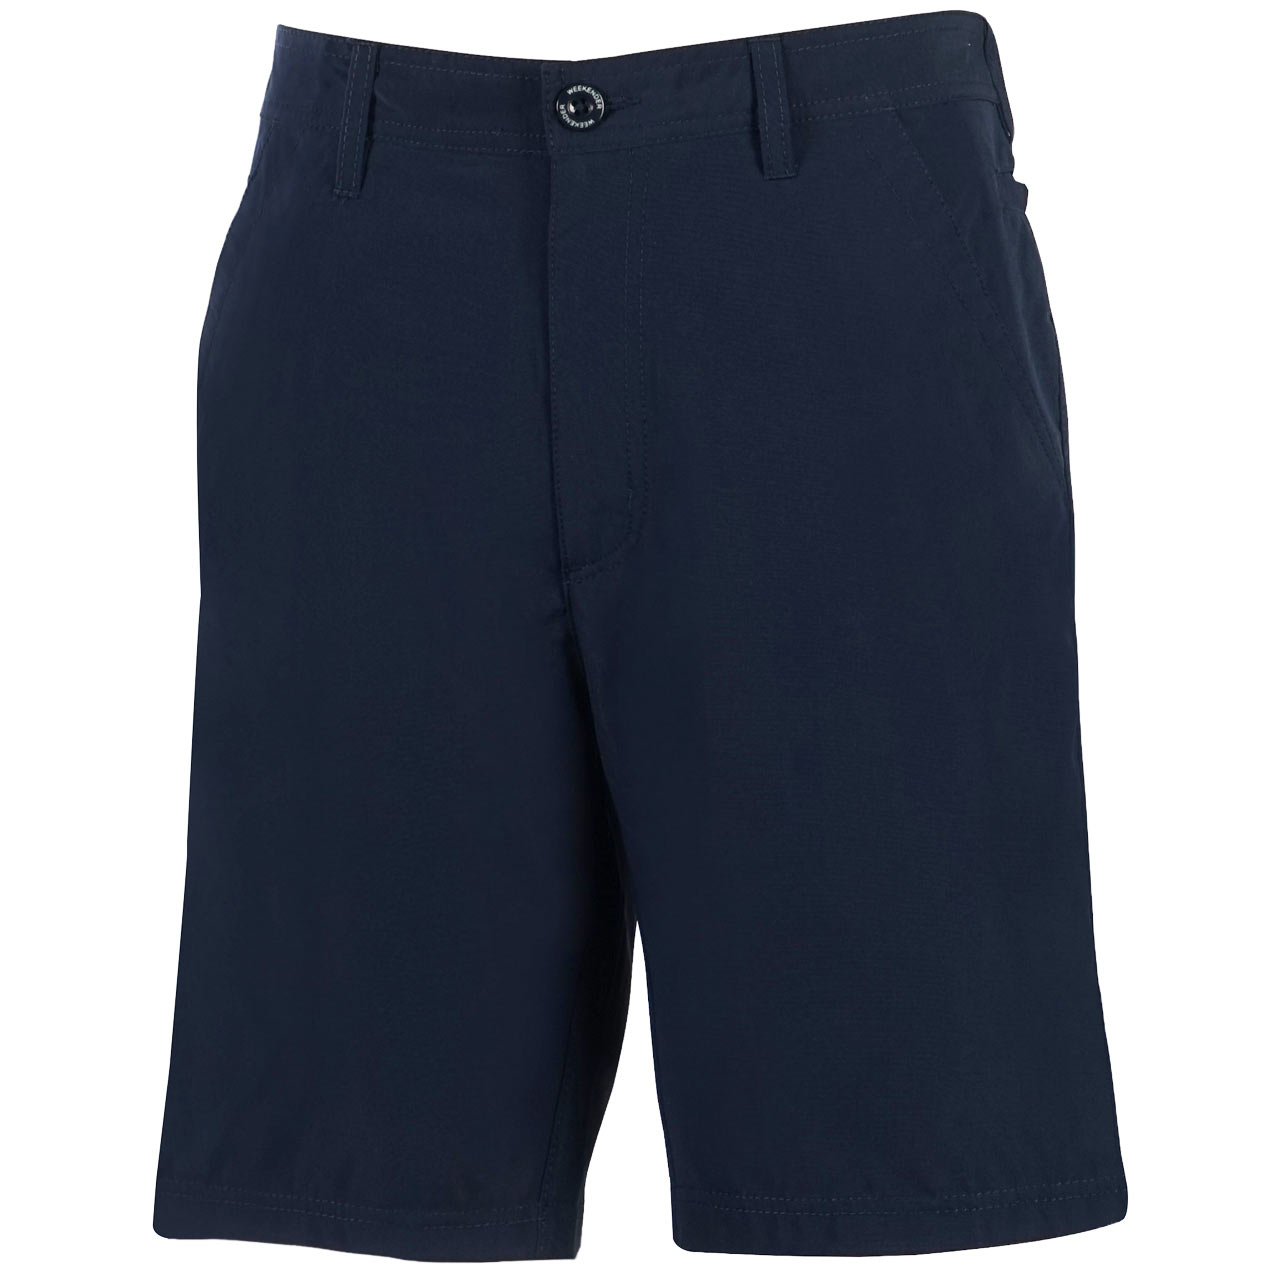 Men's Weekender Flat Front Travel Stretch Technology Shorts, Sandalwood #M039450-290, Navy